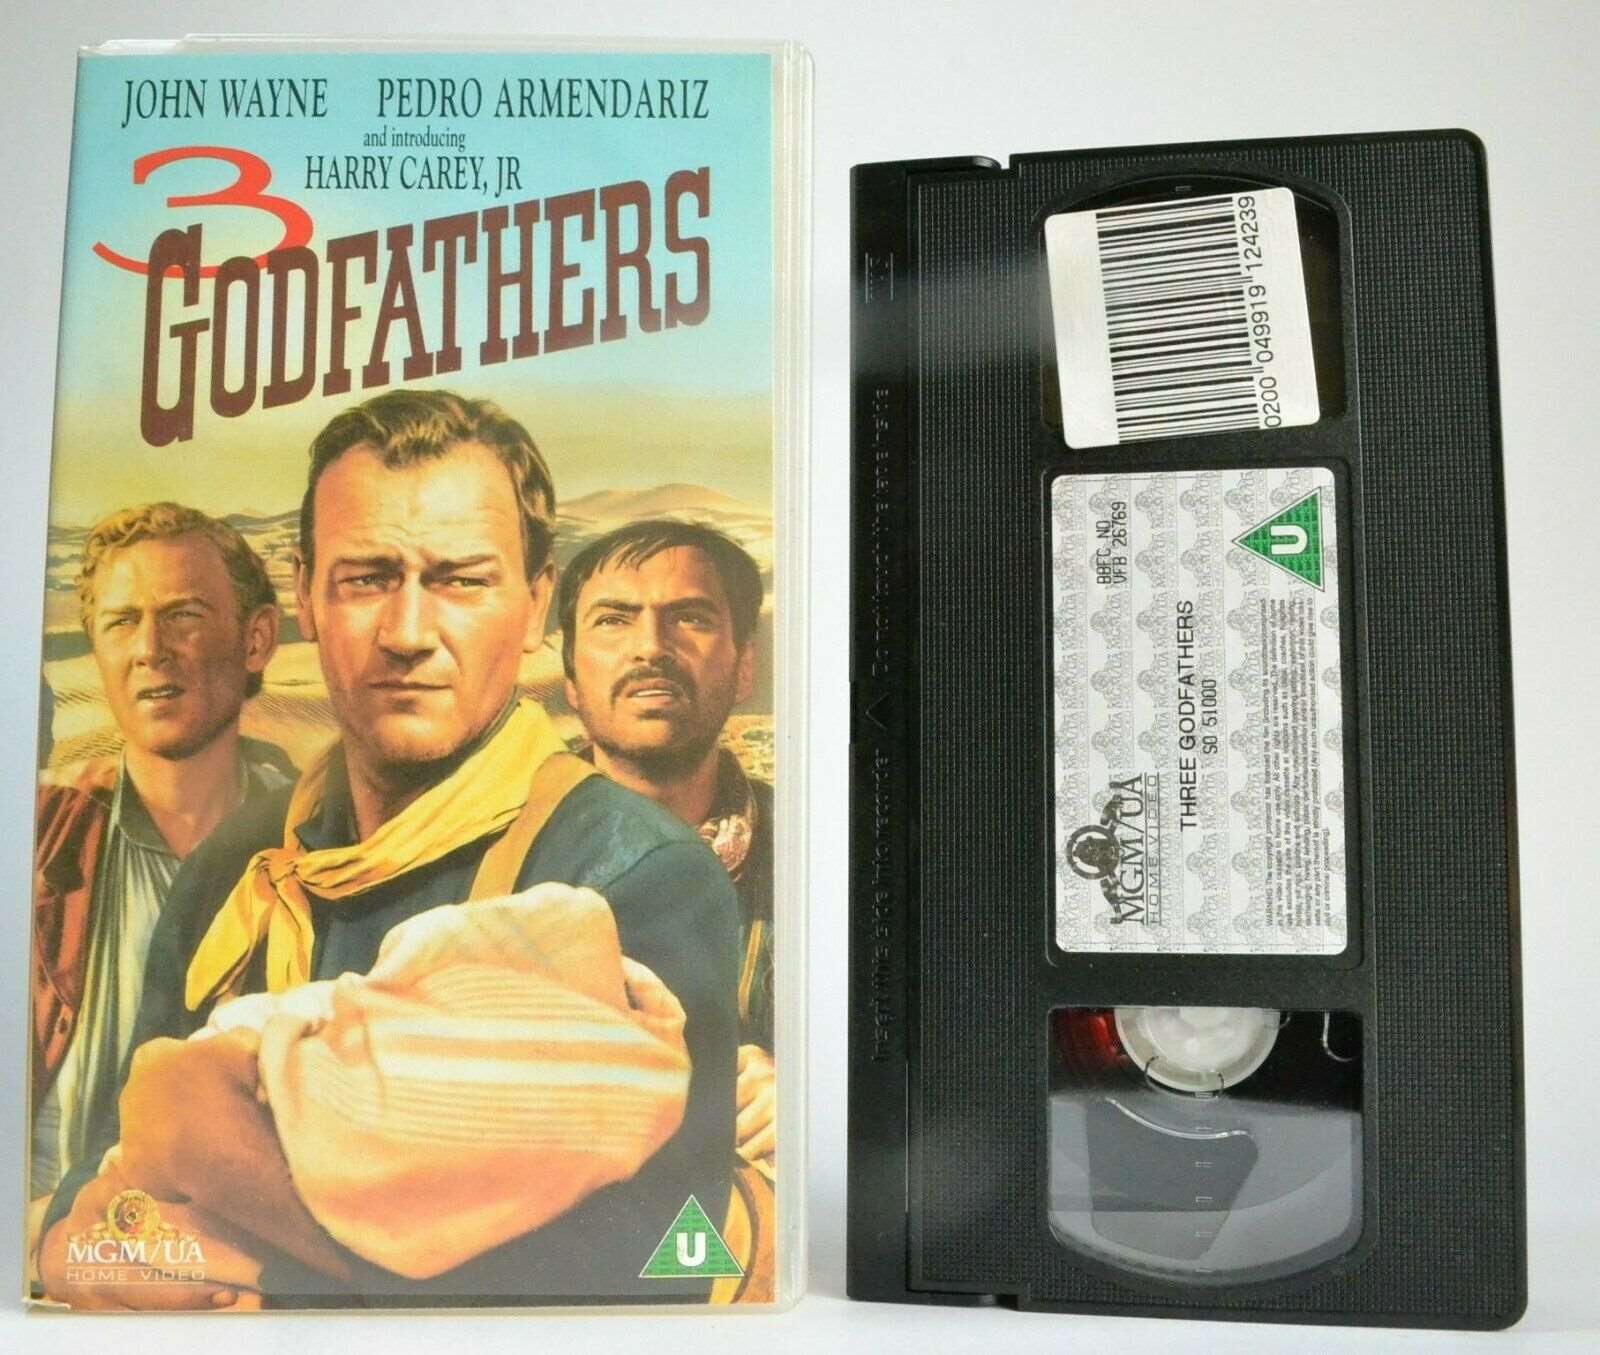 3 Godfathers (1948); [Peter B.Kynes] Western [John Wayne / Harry Caret, Jr] VHS-